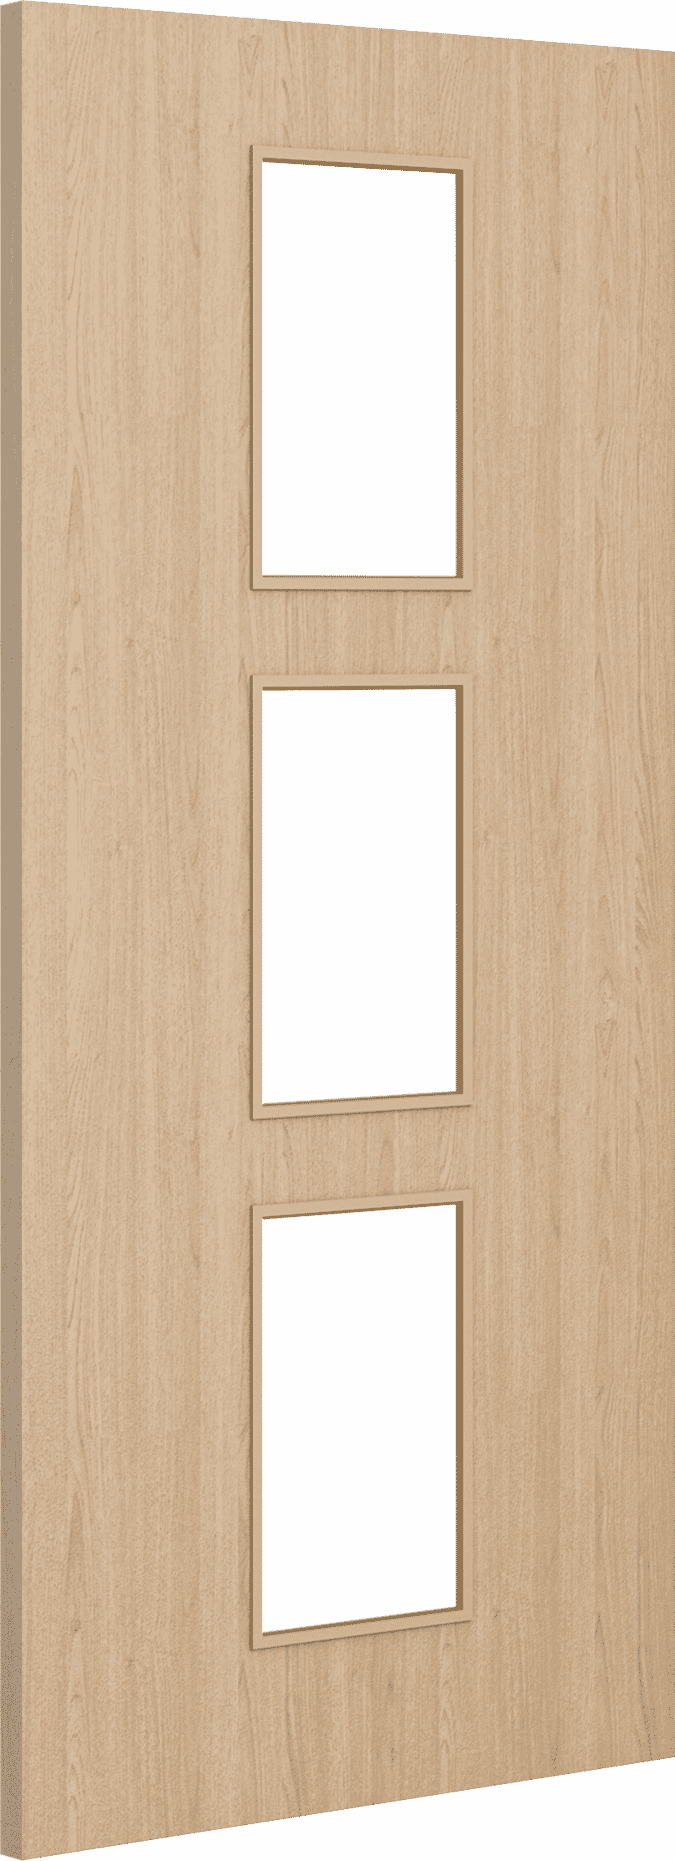 1981mm x 686mm x 44mm (27") Architectural Oak 11 Frosted Glazed - Prefinished FD30 Fire Door Blank